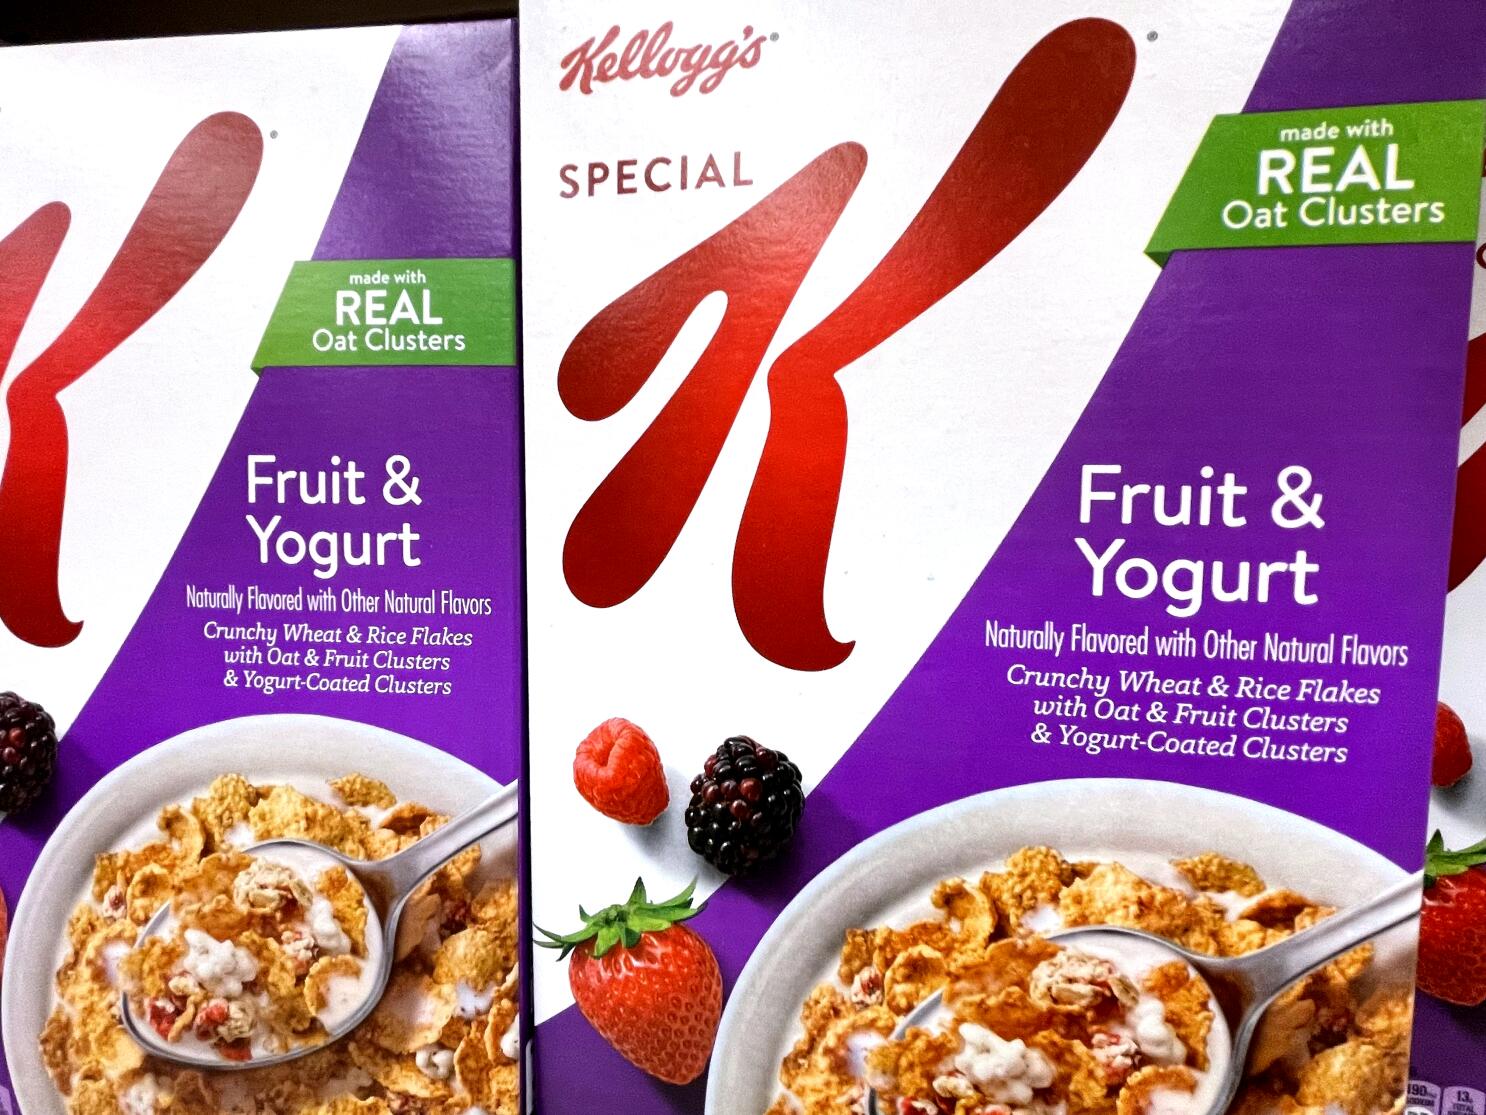 Mexico seizes 380,000 boxes of Kellogg's cereal - The San Diego